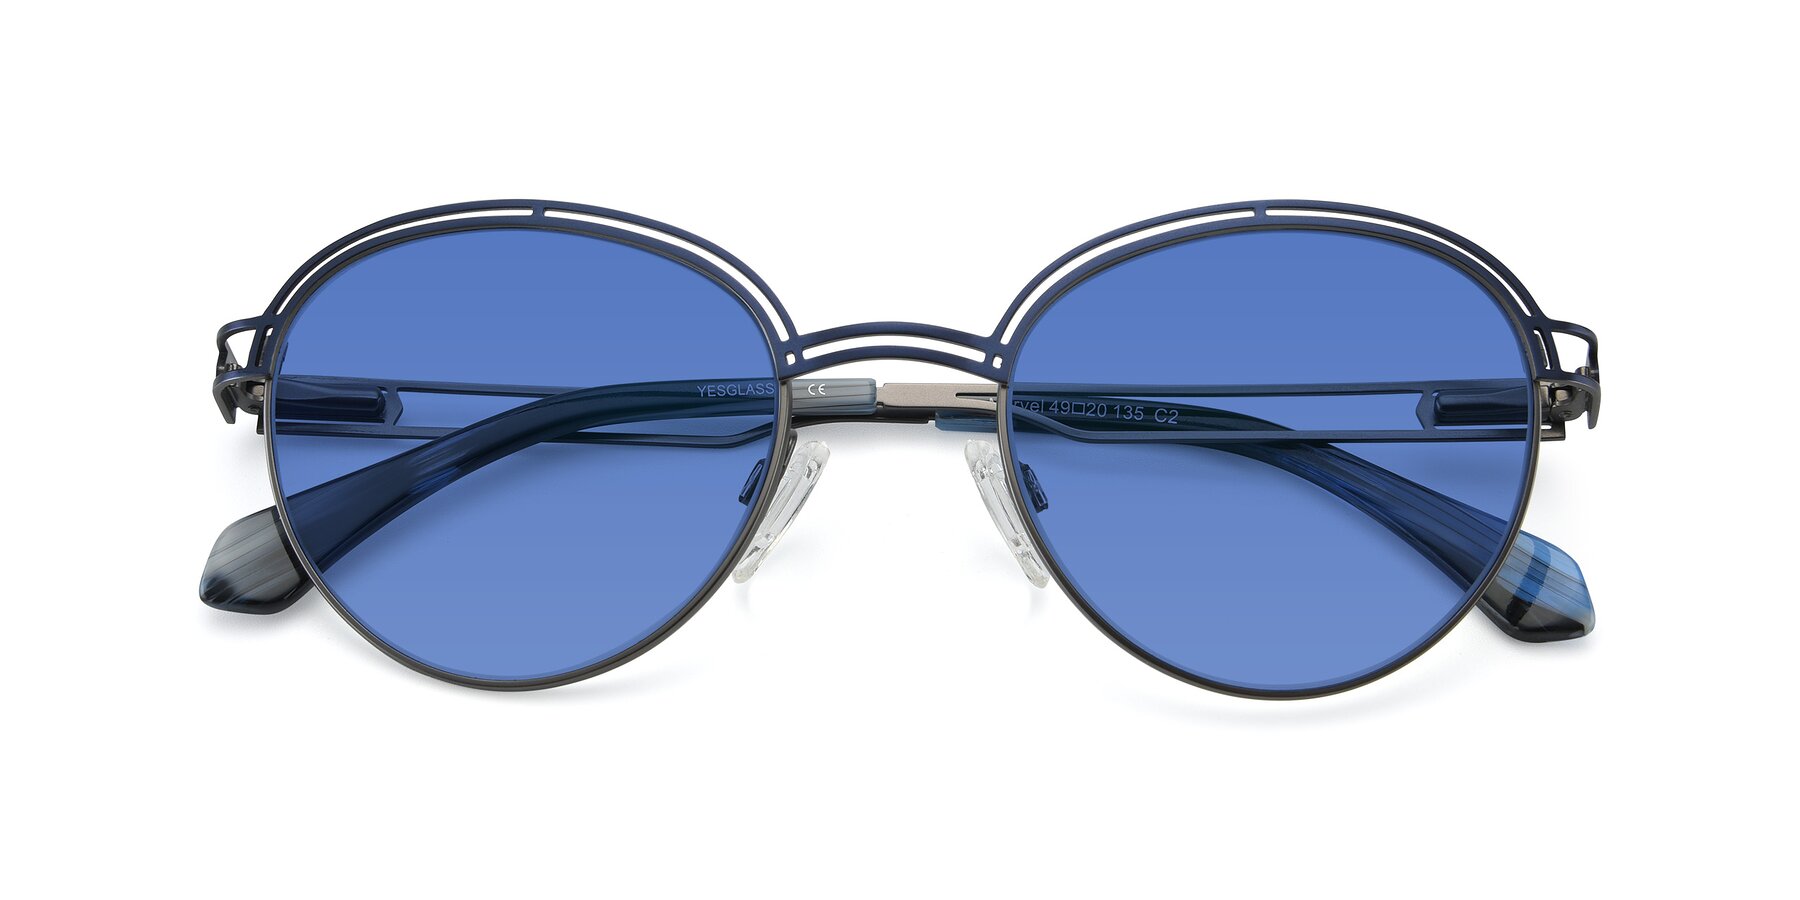 Sunwear with Bridge Lenses - Blue Marvel Hipster Blue-Gunmetal Browline Tinted Sunglasses Double